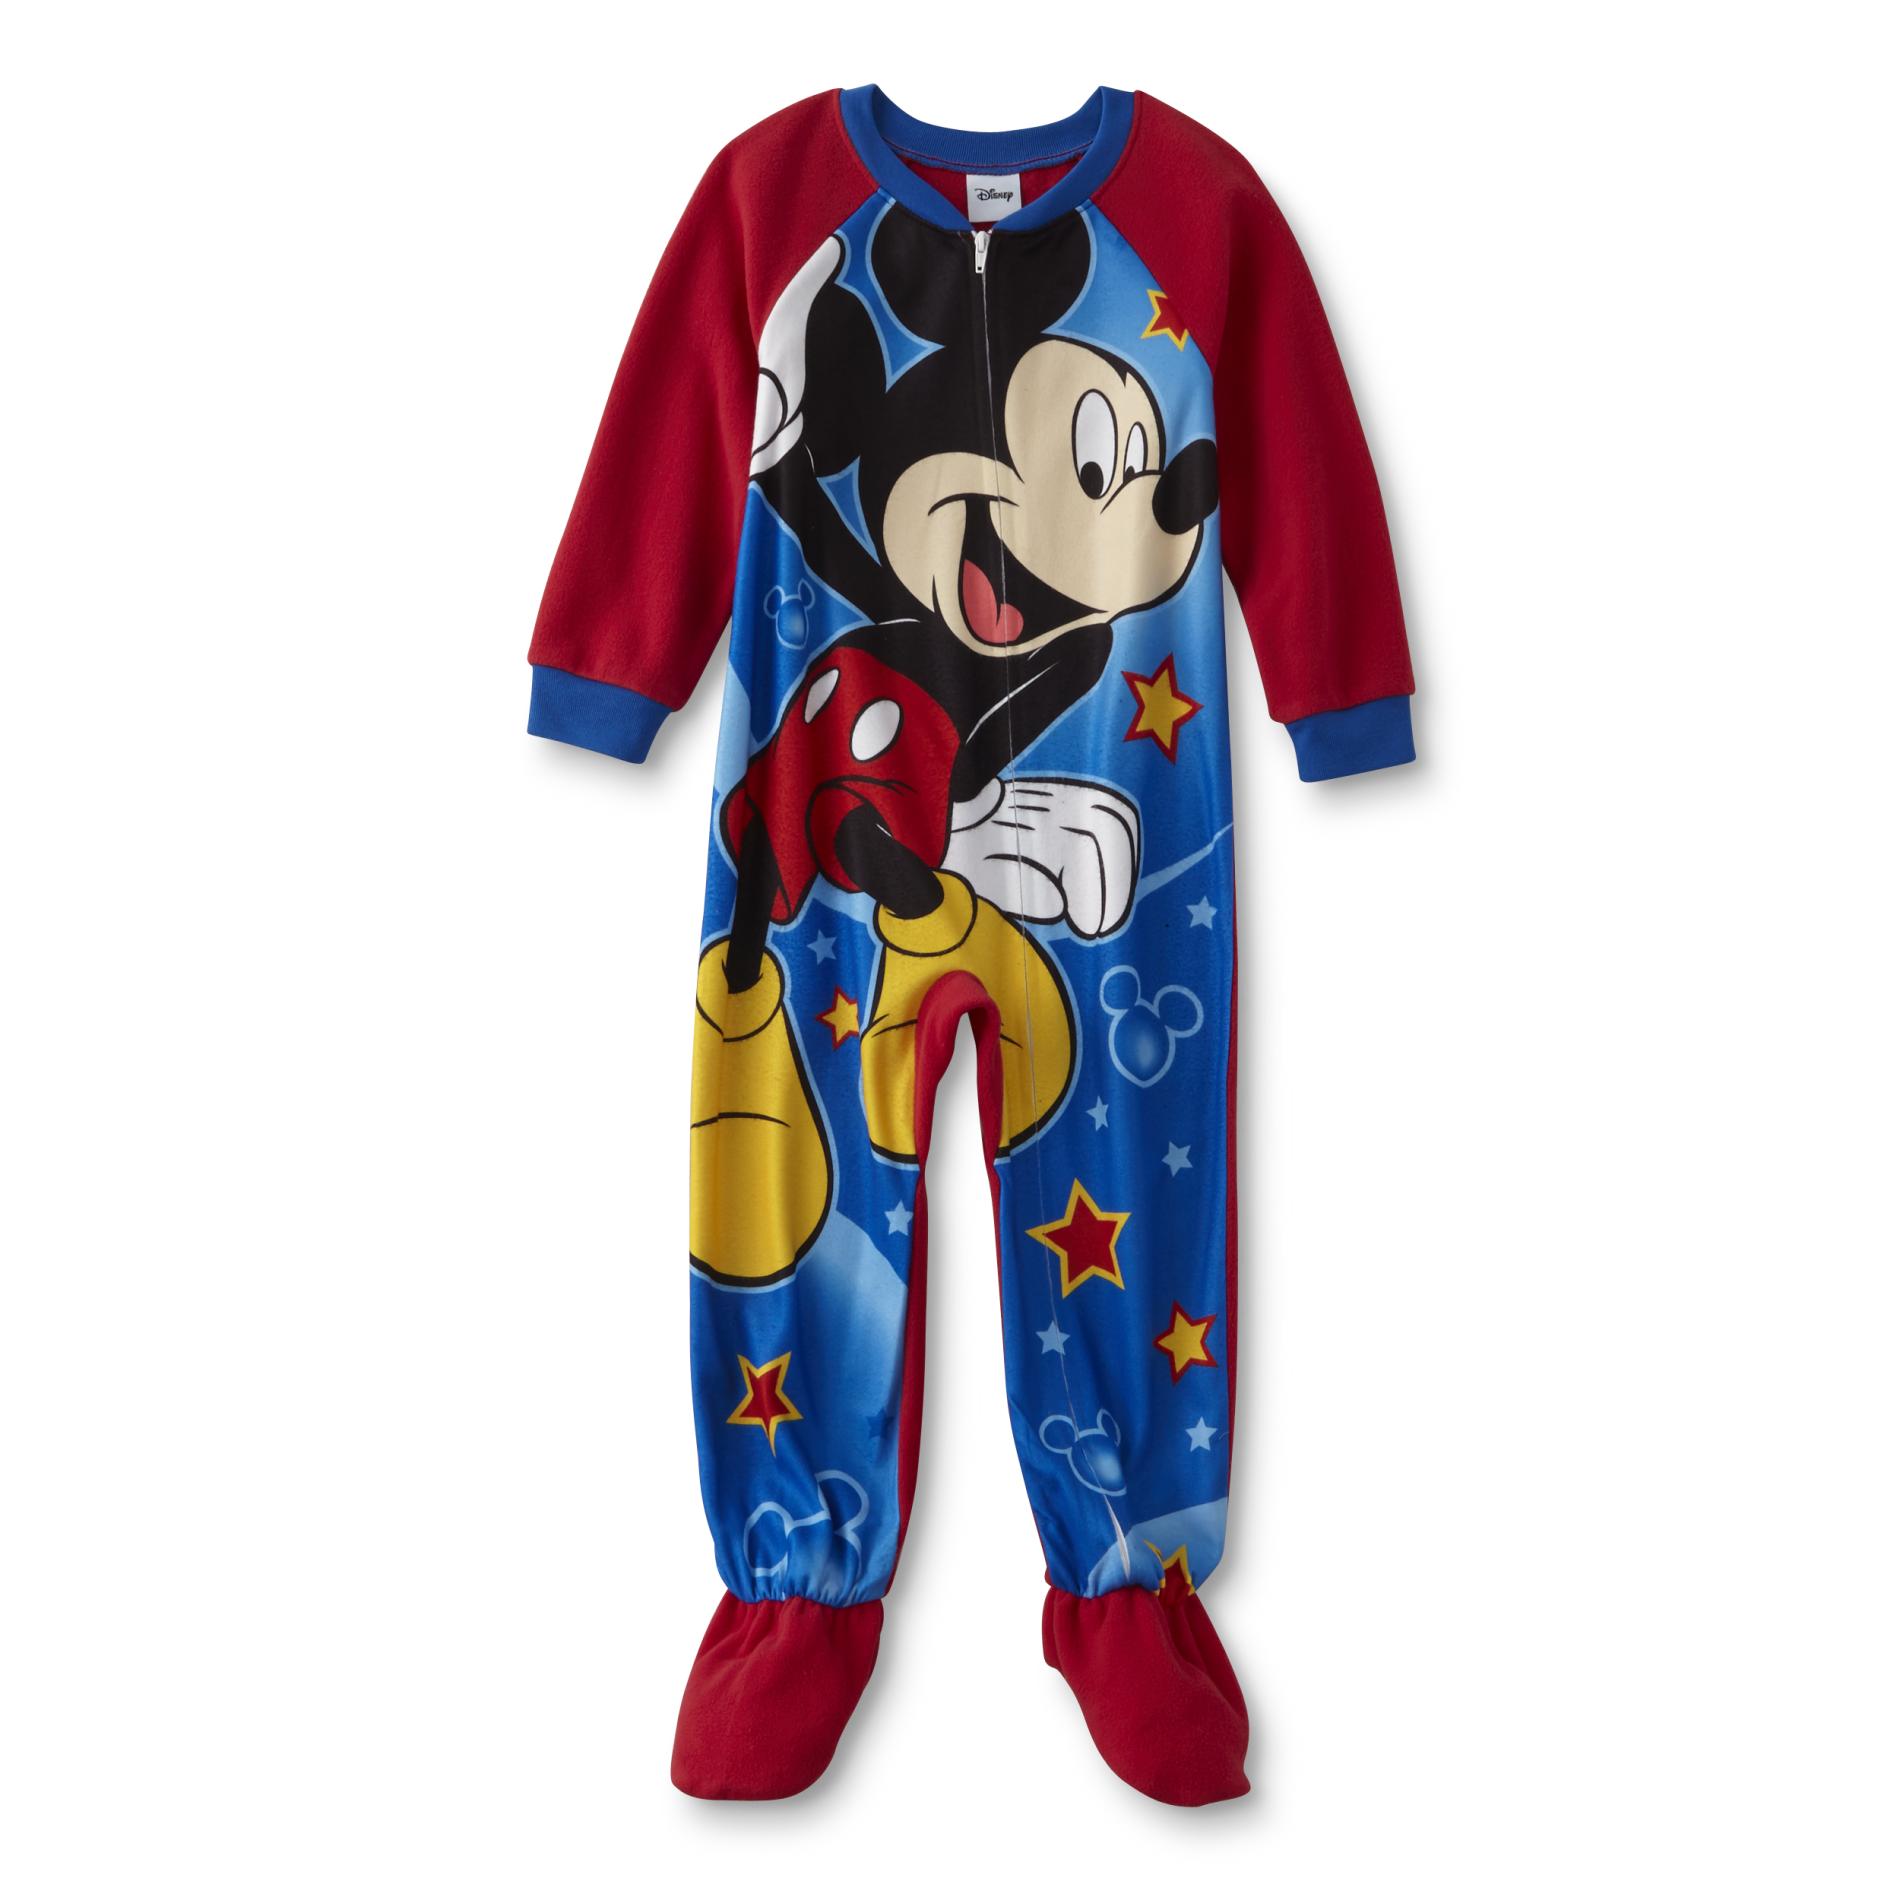 Disney Mickey Mouse Toddler Boy's Sleeper Pajamas